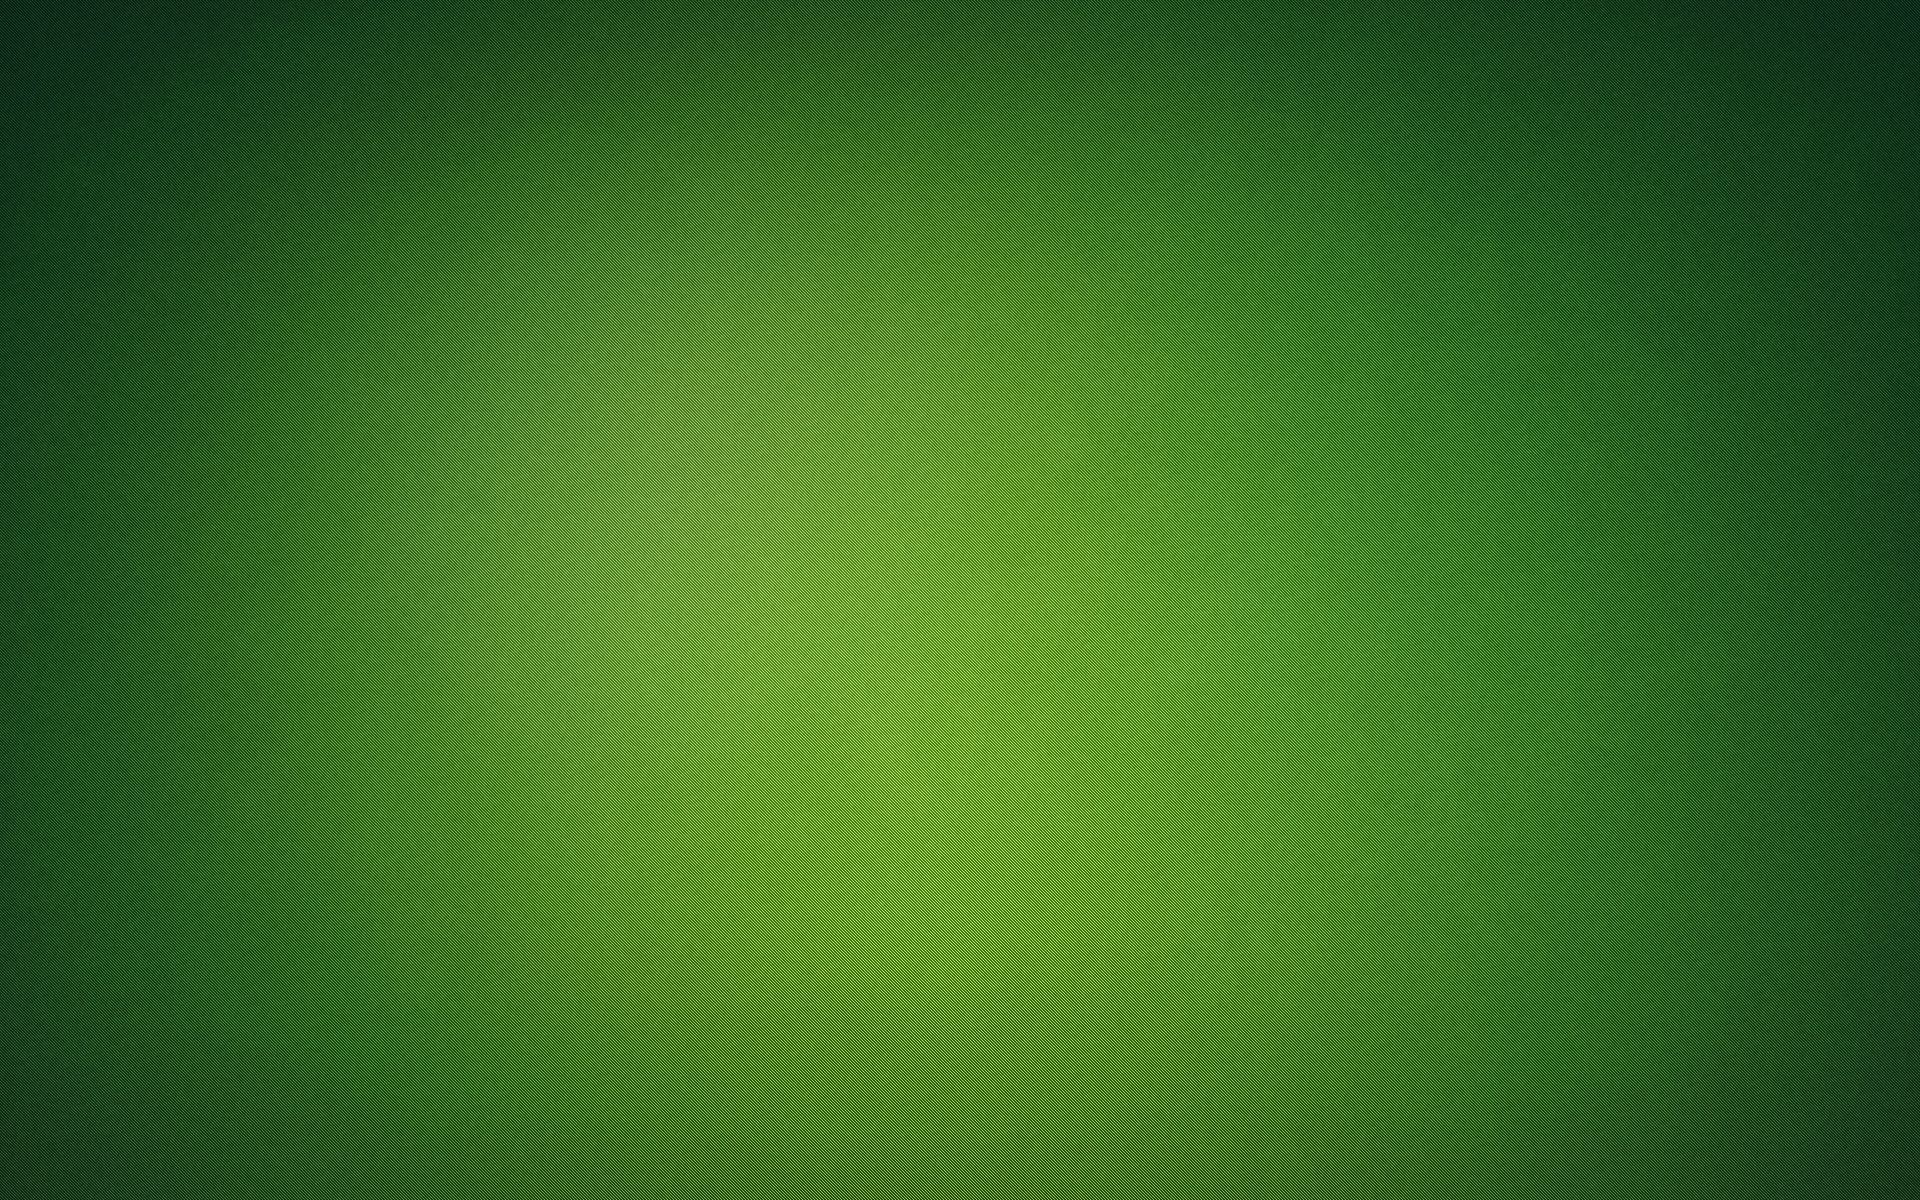 Wallpaper, desktop, abstract, green, background, backgrounds - 22828